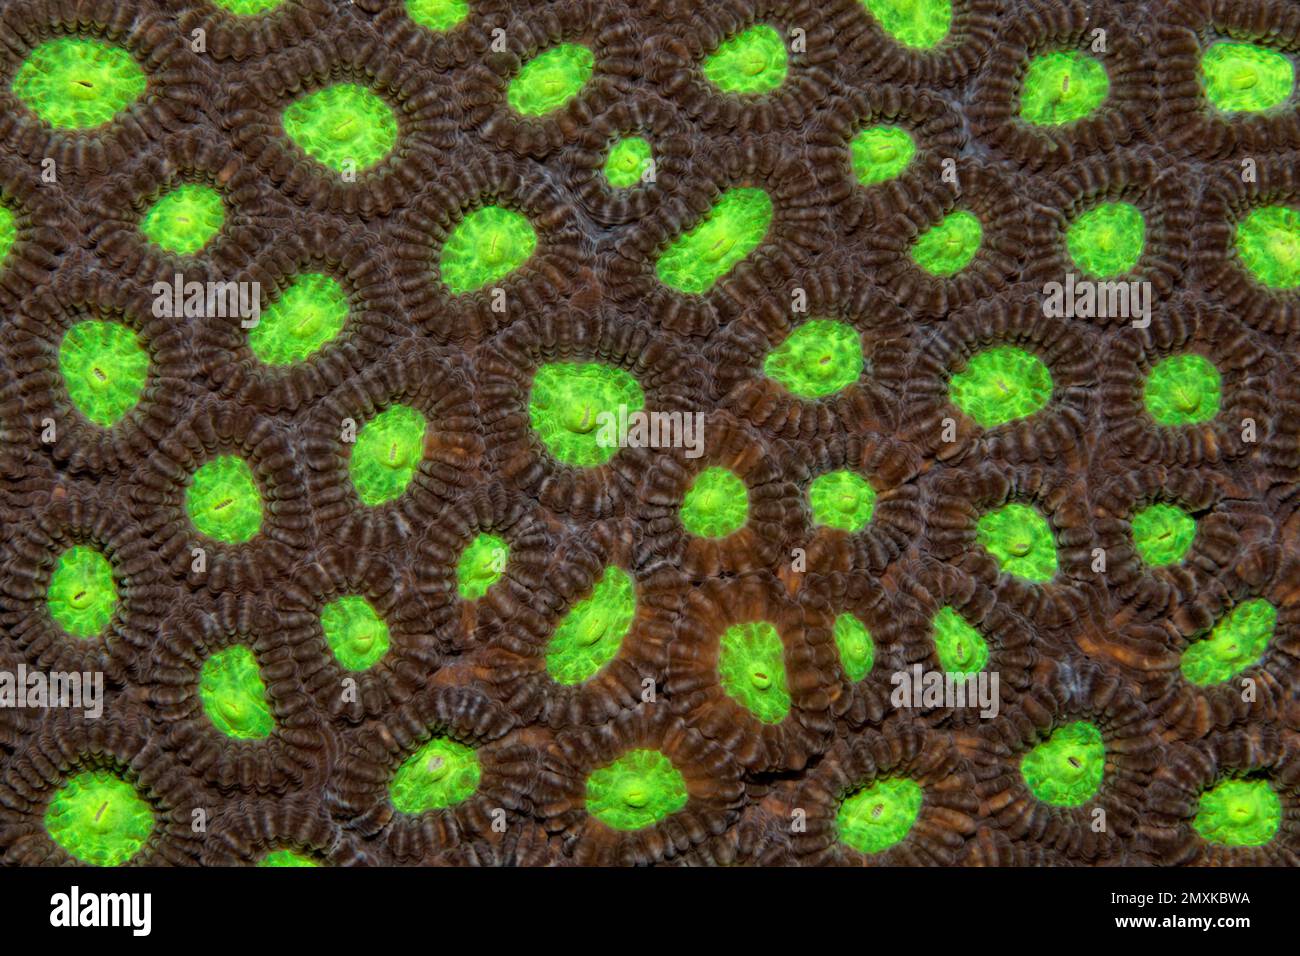 Detail of stony coral with indented polyps (Favia speciosa), green, Banda Sea, Pacific Ocean, Saparua, Island, Moluccas, Indonesia, Asia Stock Photo